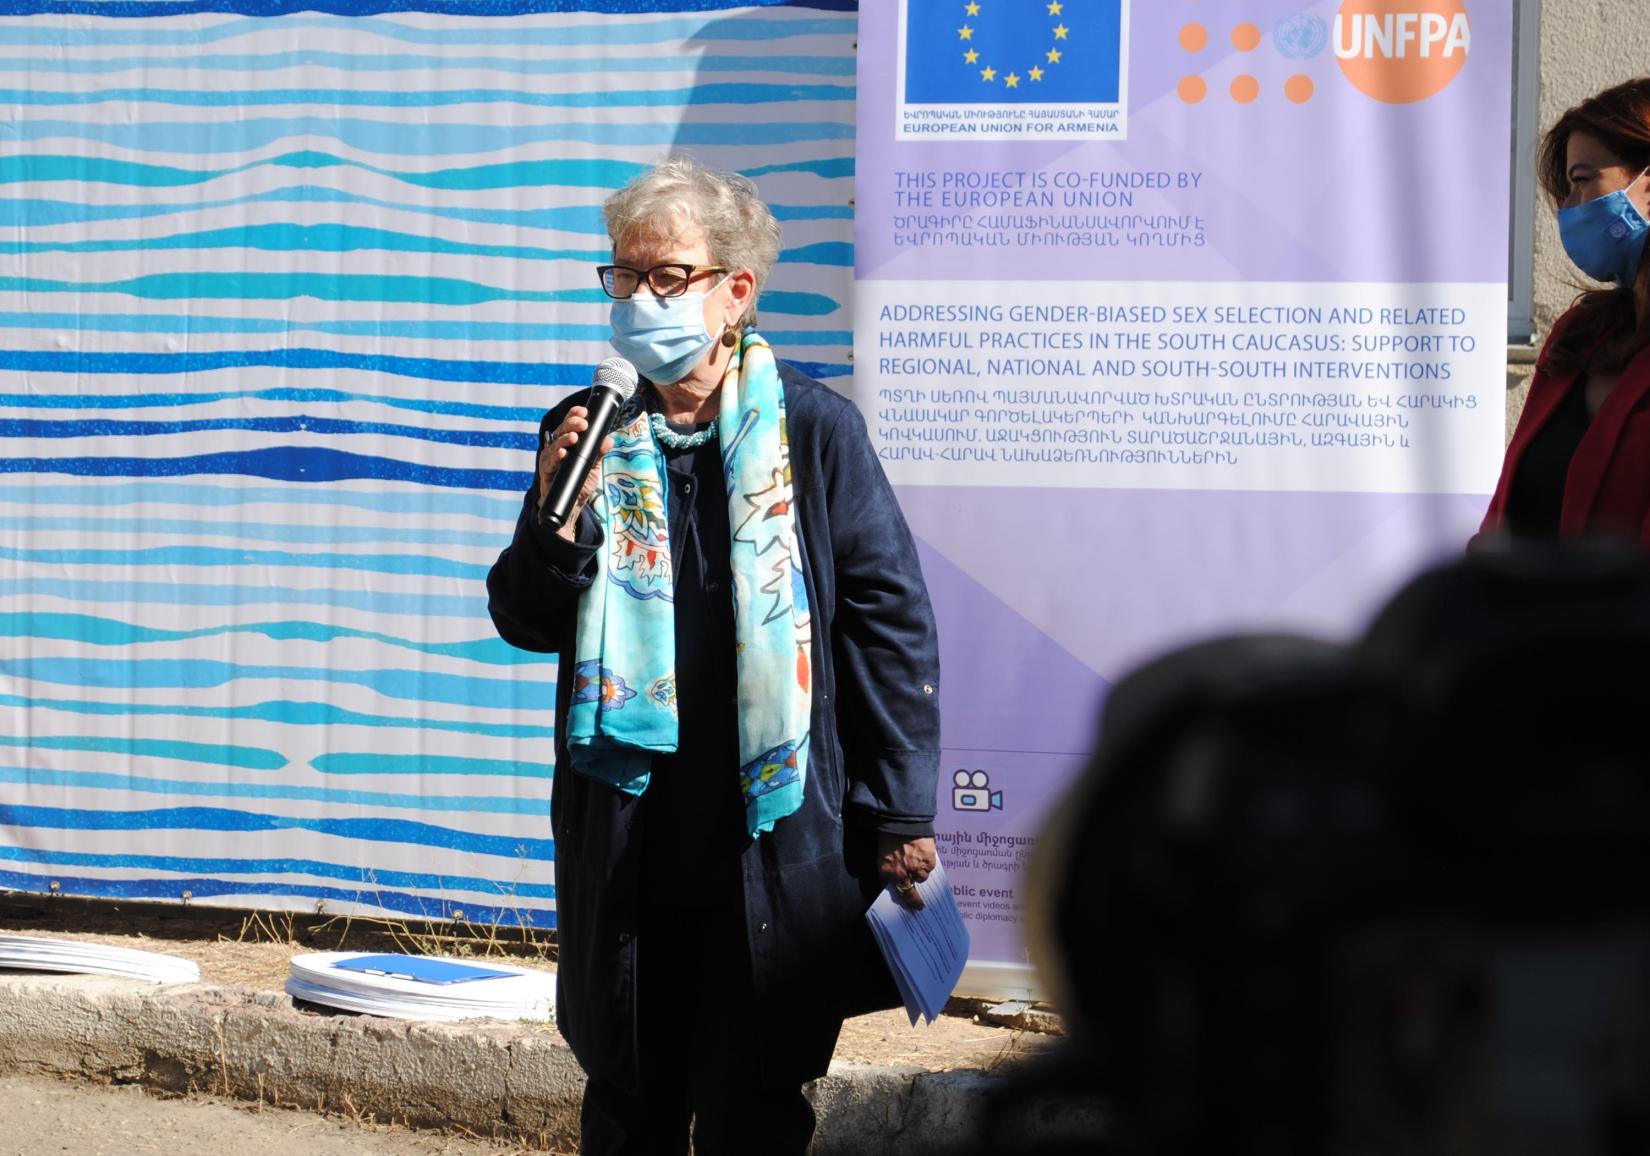 Ambassador of the European Union to the Republic of Armenia, H.E. Andrea Wiktorin during her speech.